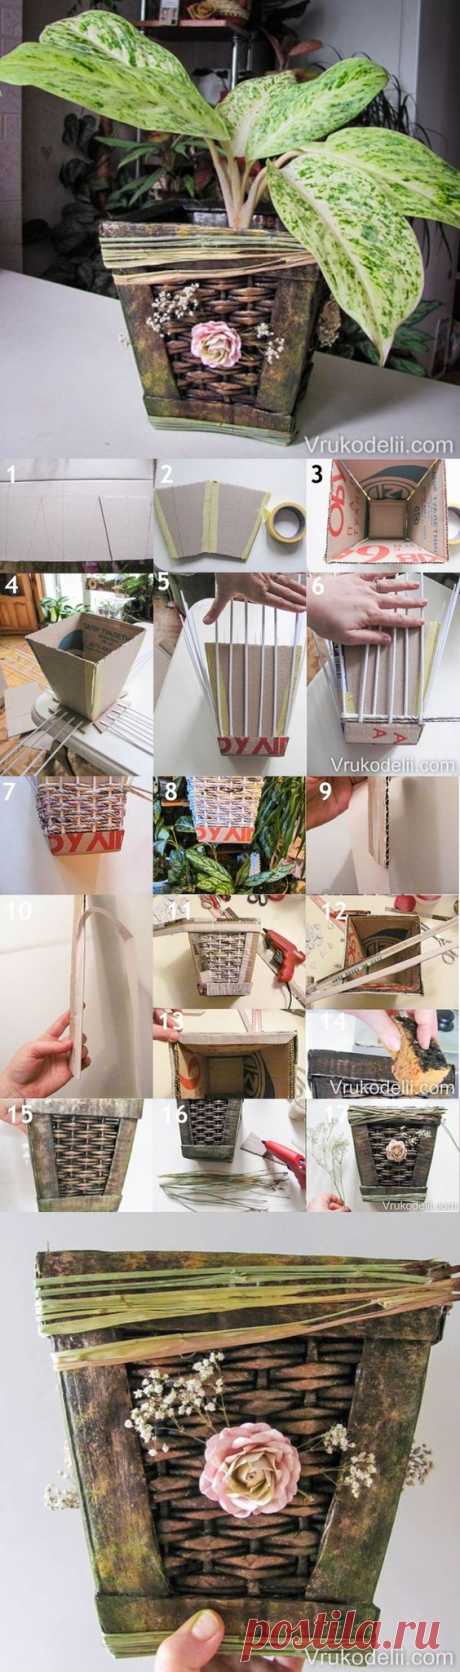 (2) DIY Retro Paper Planter from Old Newspaper | www.FabArtDIY.com LIKE Us on Facebook ==&gt; https://www.facebook.com/FabArtDIY | paper basket